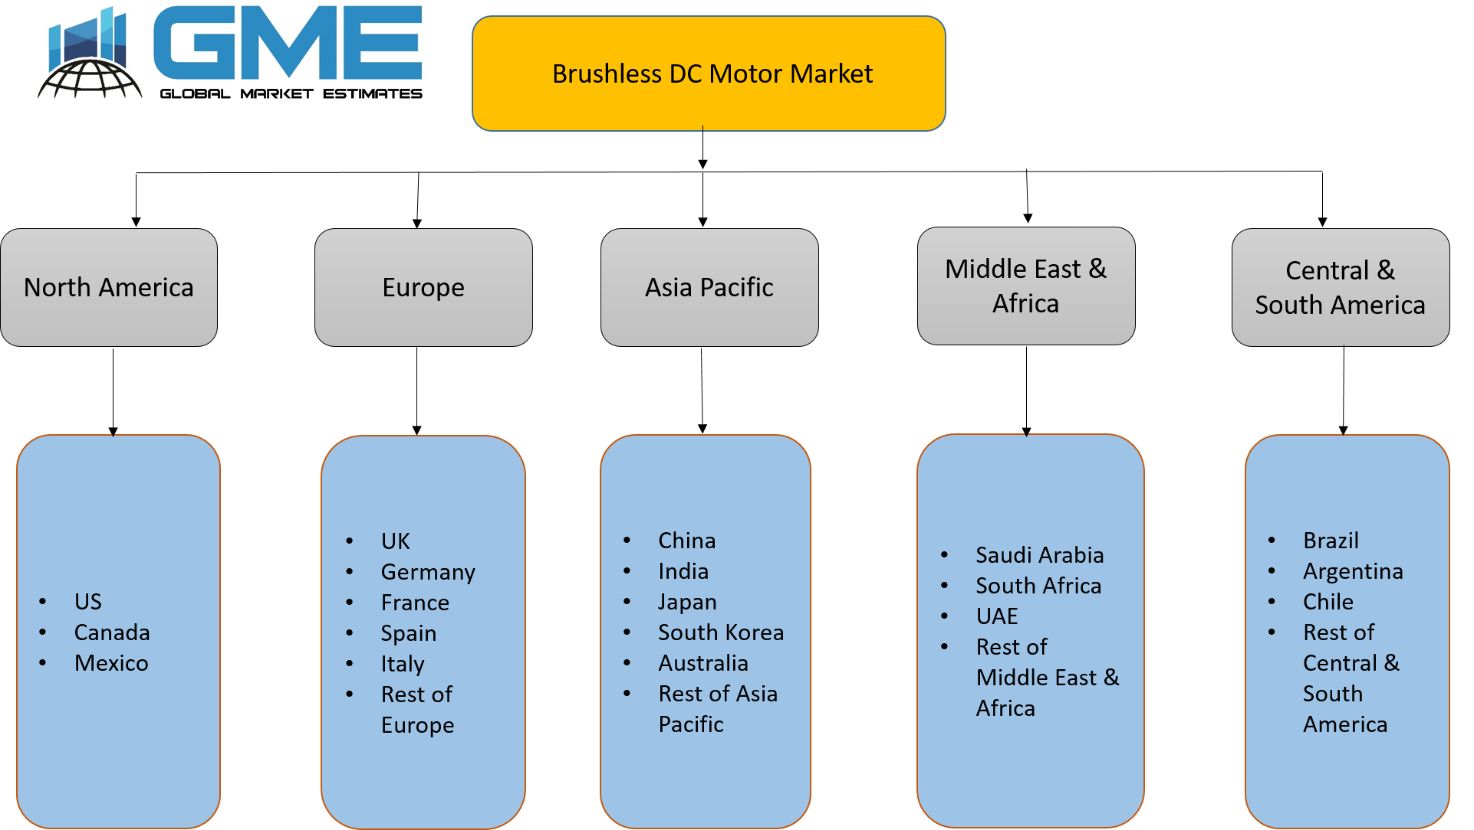 Brushless DC Motor Market - Regional Analysis